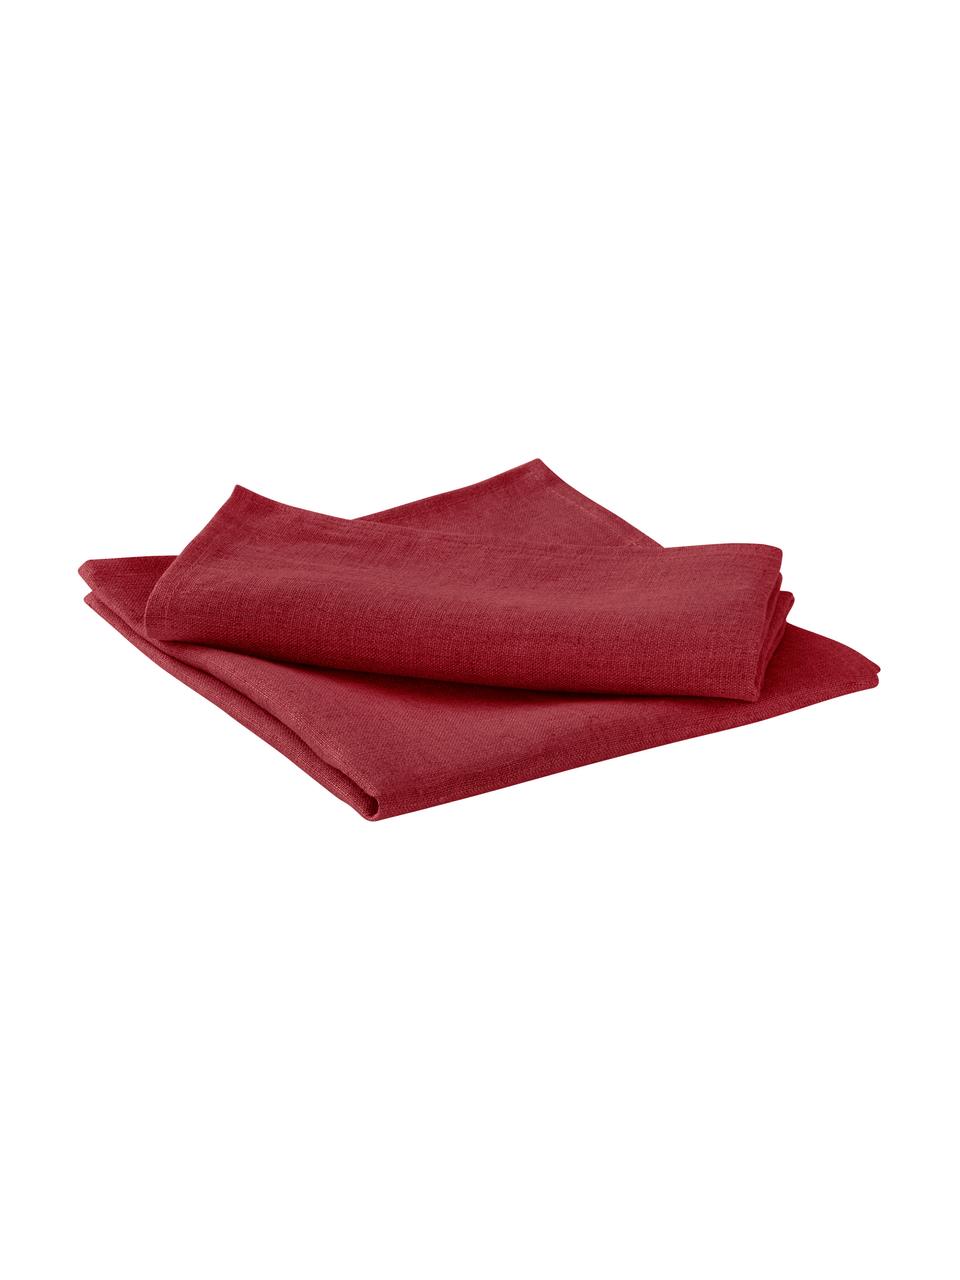 Linnen servetten Heddie in rood, 2 stuks, 100% linnen, Rood, 45 x 45 cm